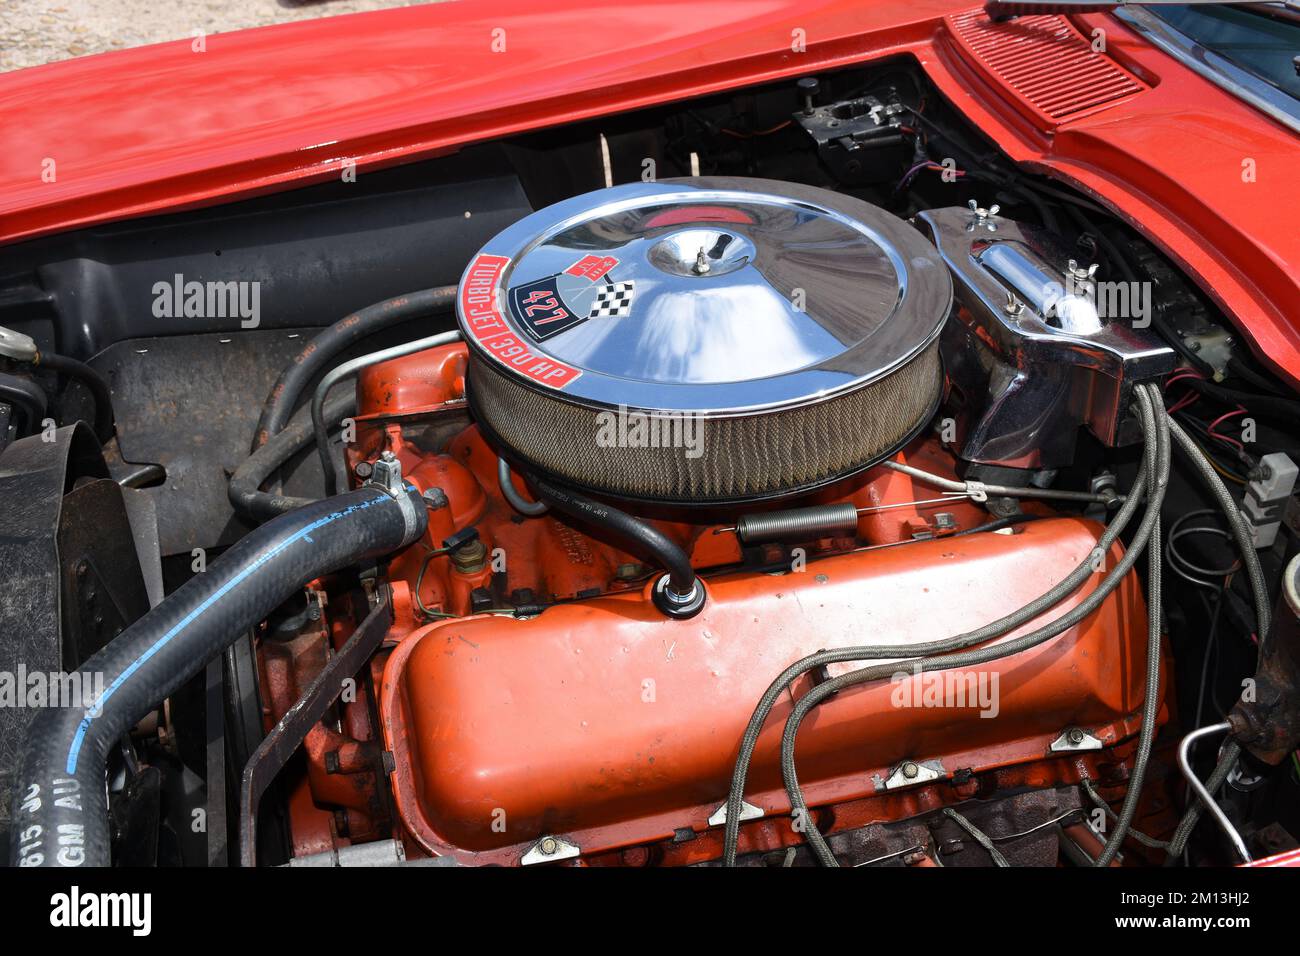 A 427cid Chevrolet engine in a Chevrolet Corvette. Stock Photo